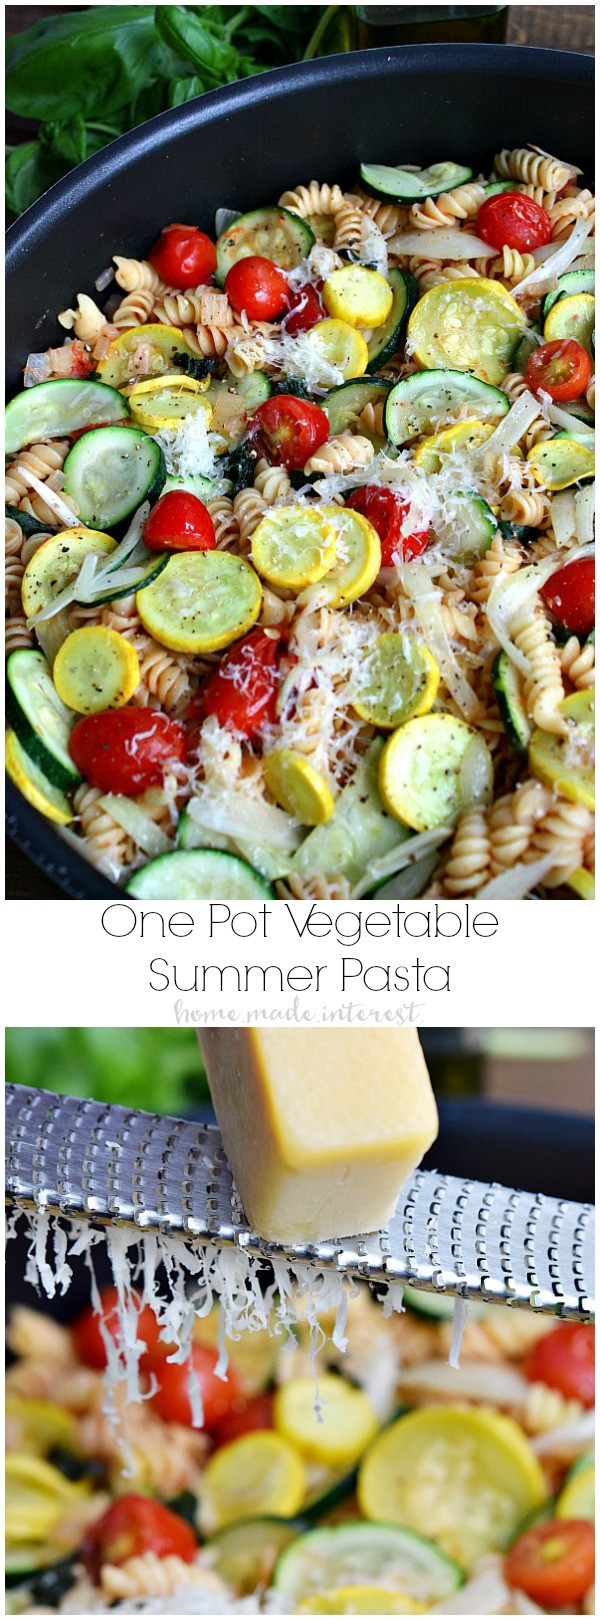 Easy Summer Vegetarian Recipes
 e Pot Summer Ve able Pasta Home Made Interest